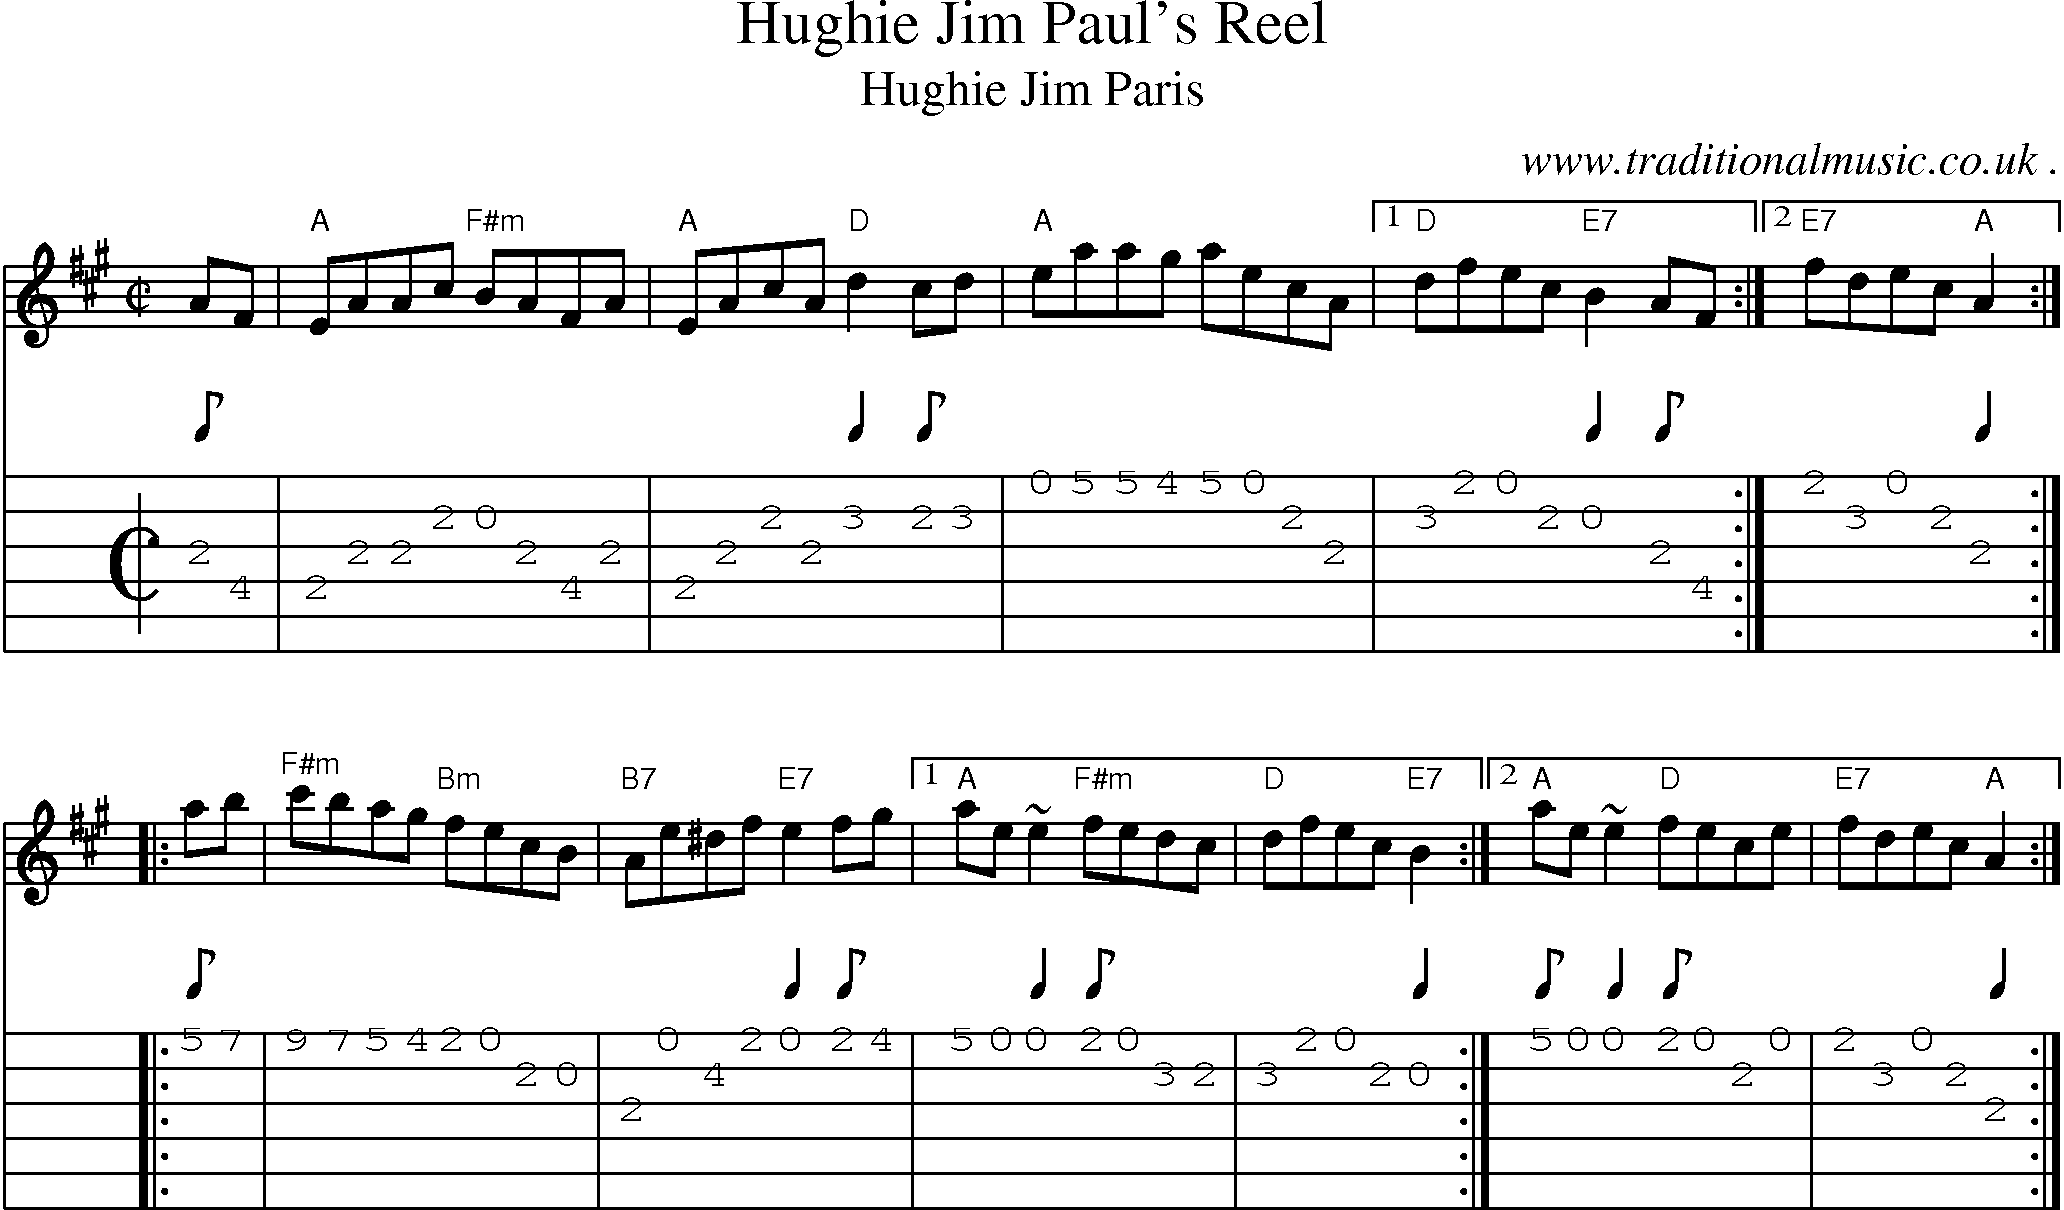 Sheet-music  score, Chords and Guitar Tabs for Hughie Jim Pauls Reel